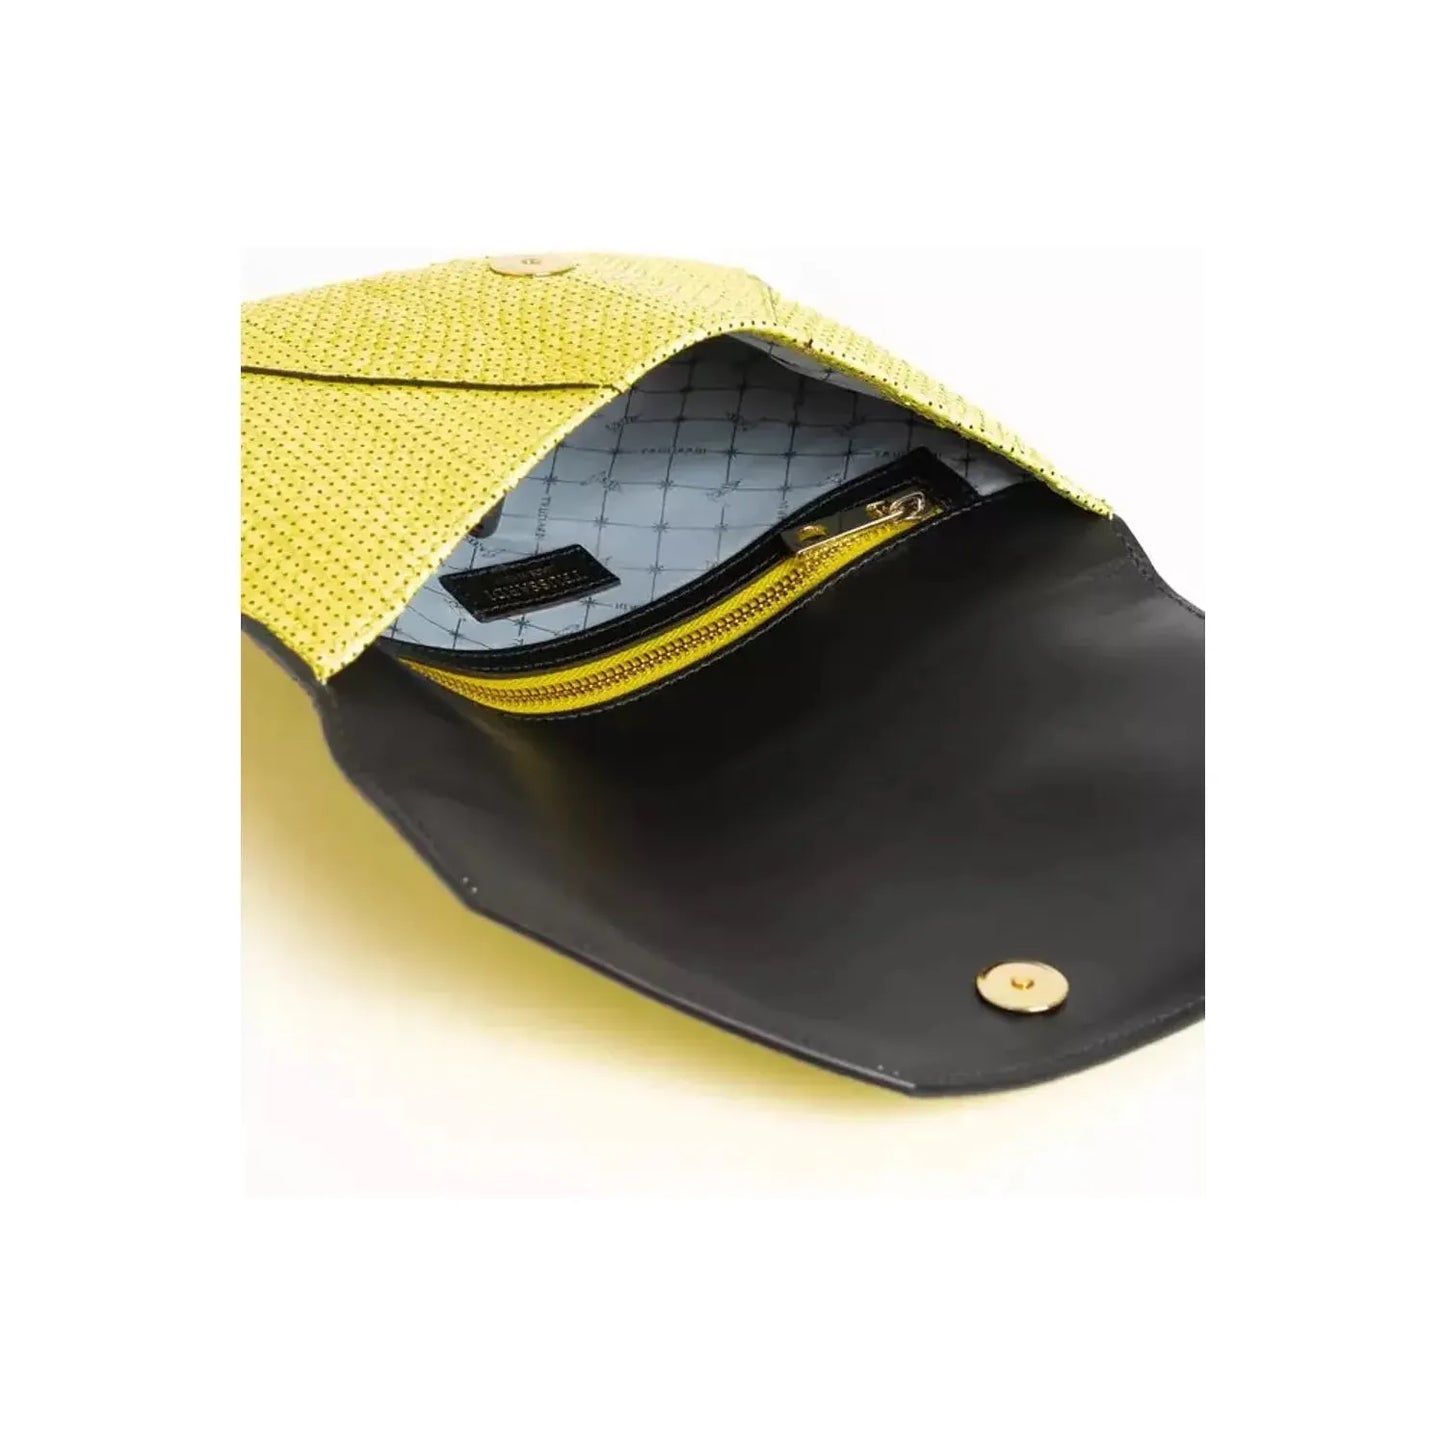 Trussardi Elegant Envelope Clutch in Delicate Elaphe WOMAN CLUTCH yellow-leather-clutch-bag